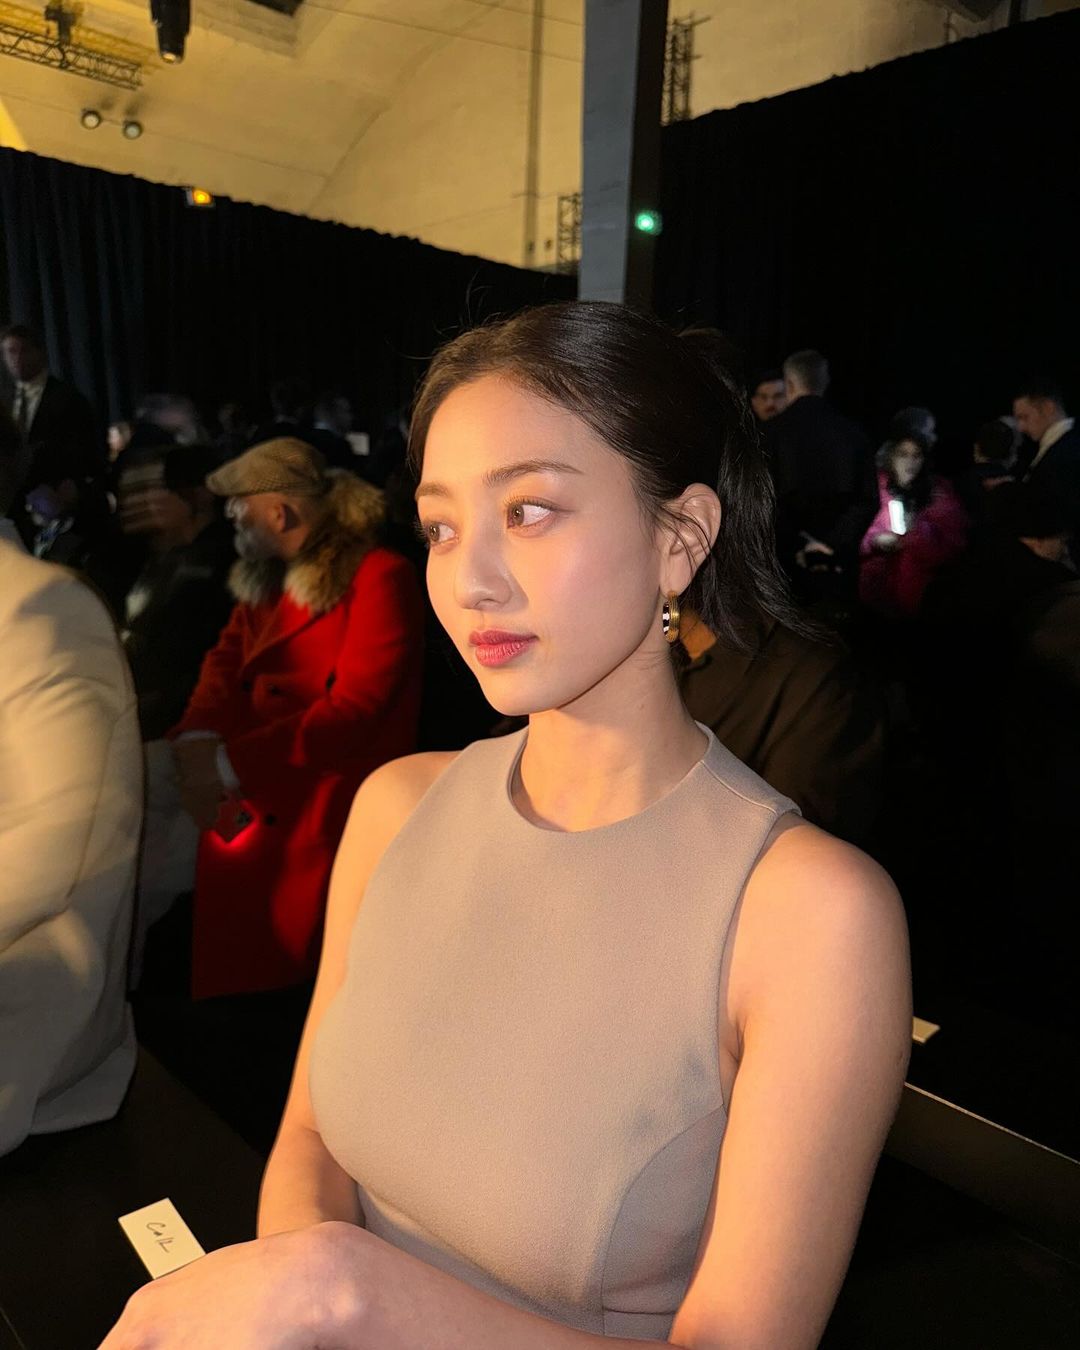 Jihyo of TWICE went to the ami fashion show wearing a gray dress